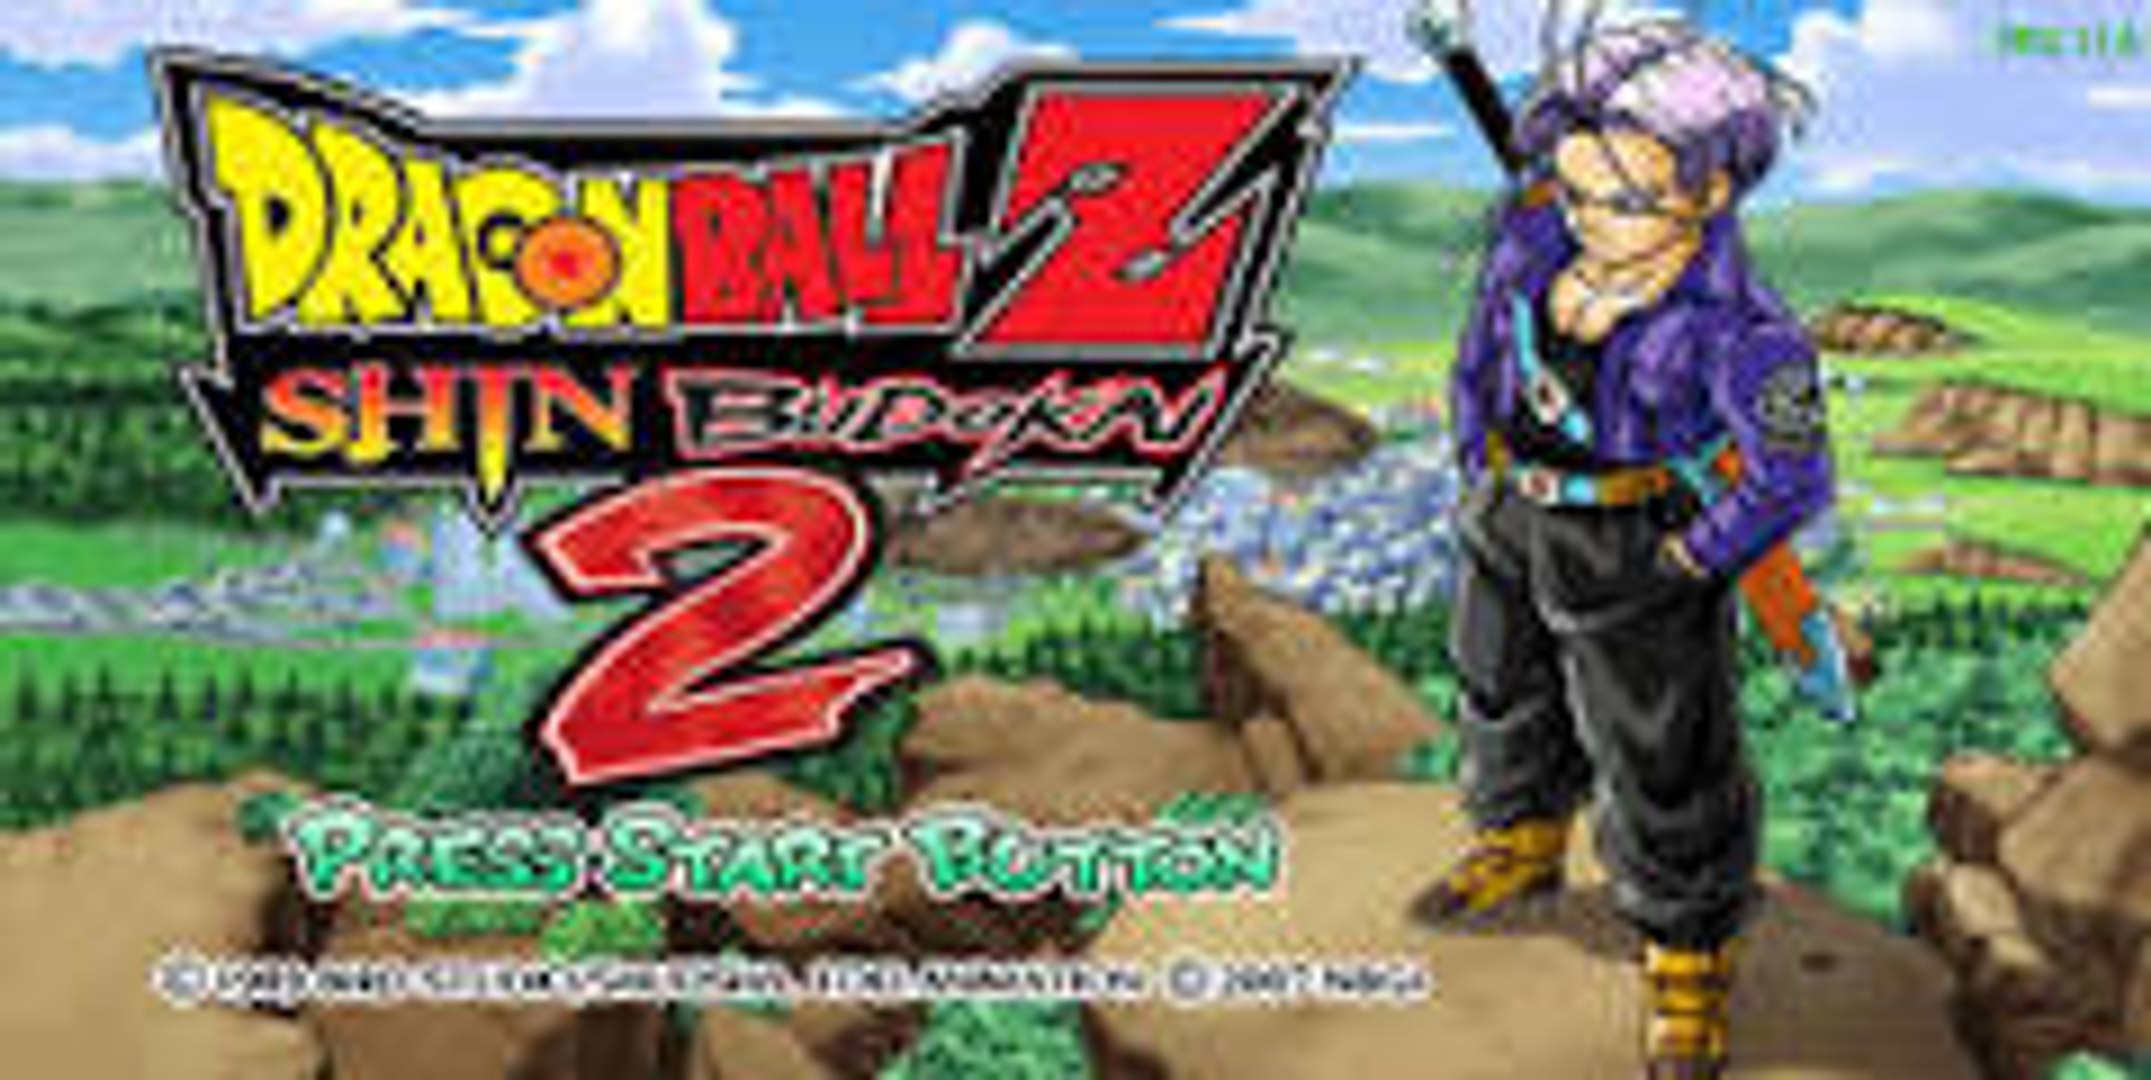 Download Dragon Ball Z Budokai Tenkaichi 3 APK latest v1.0.1 for